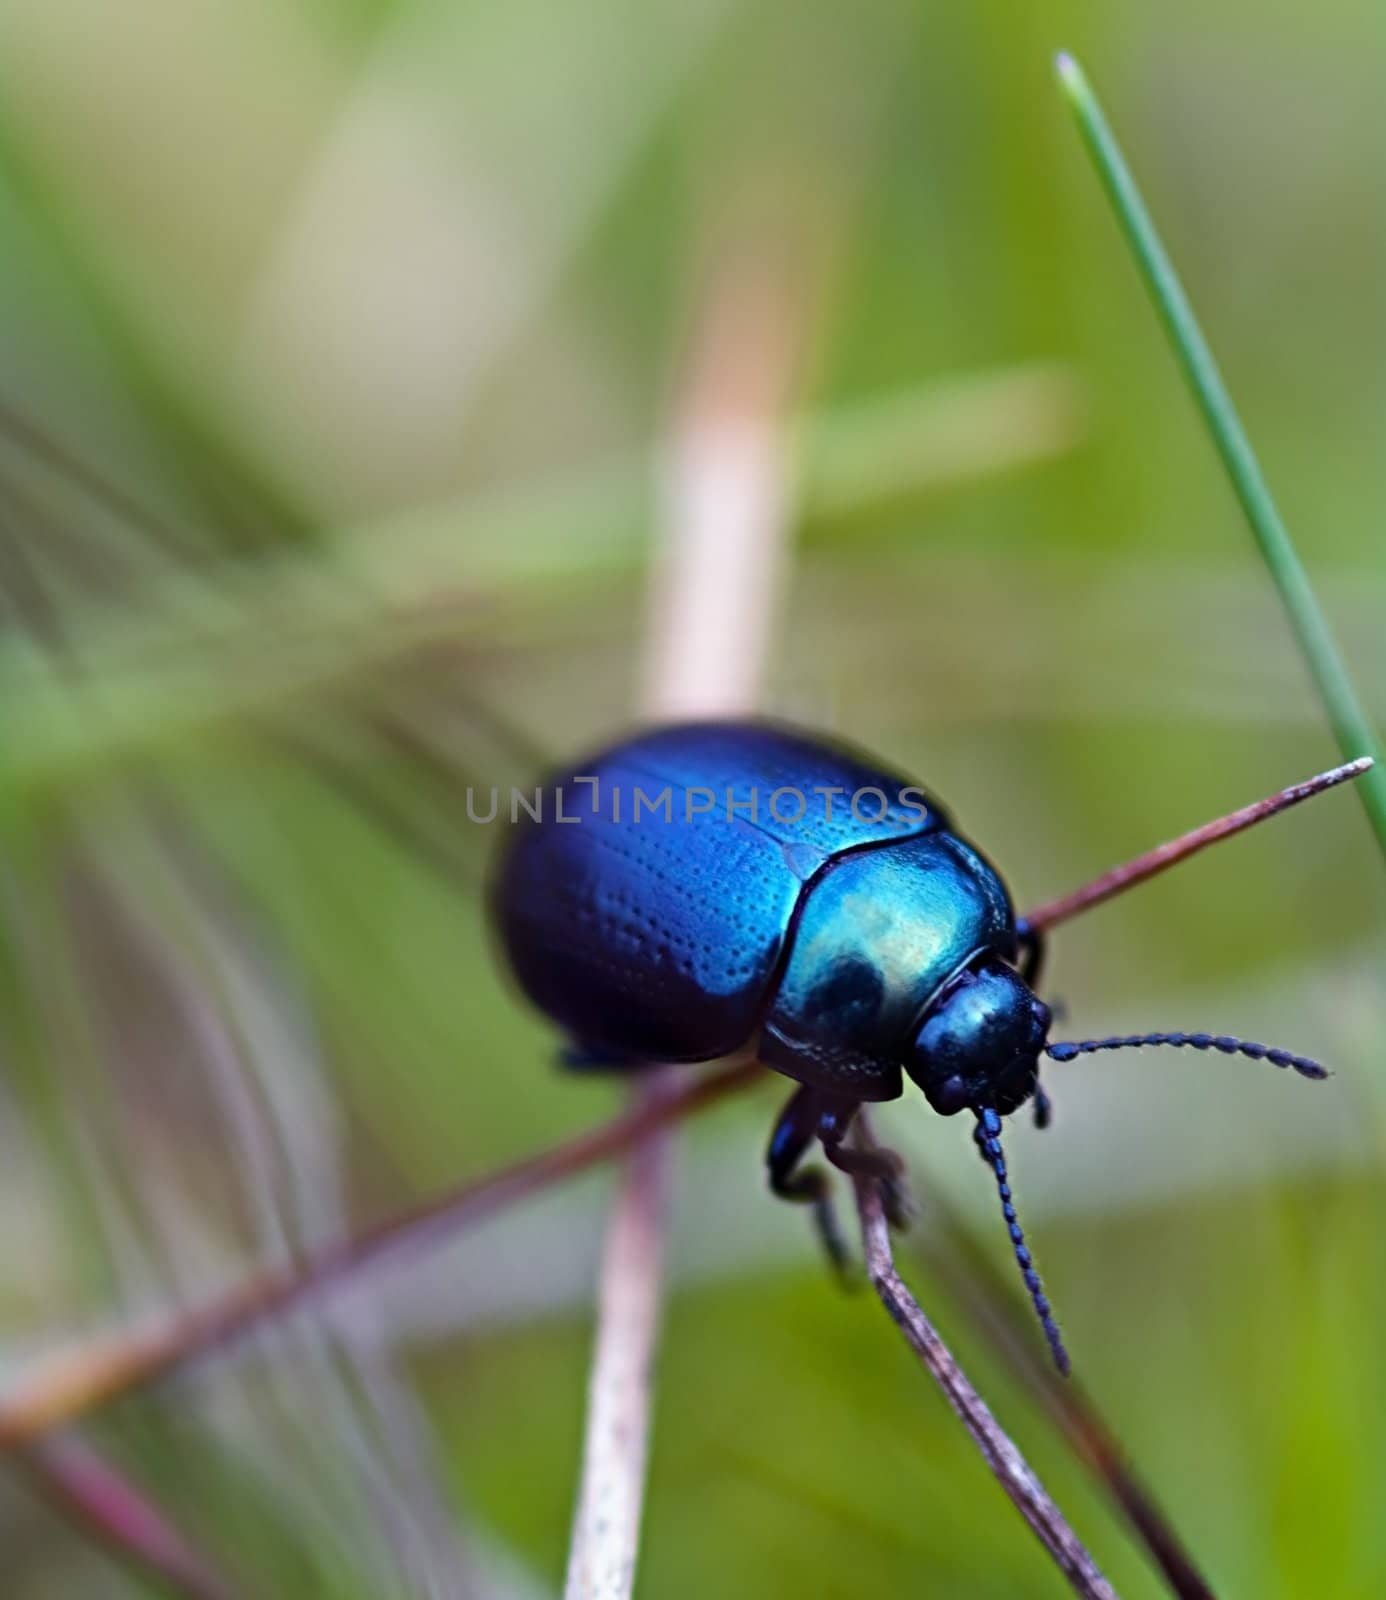 Blue beetle by baggiovara